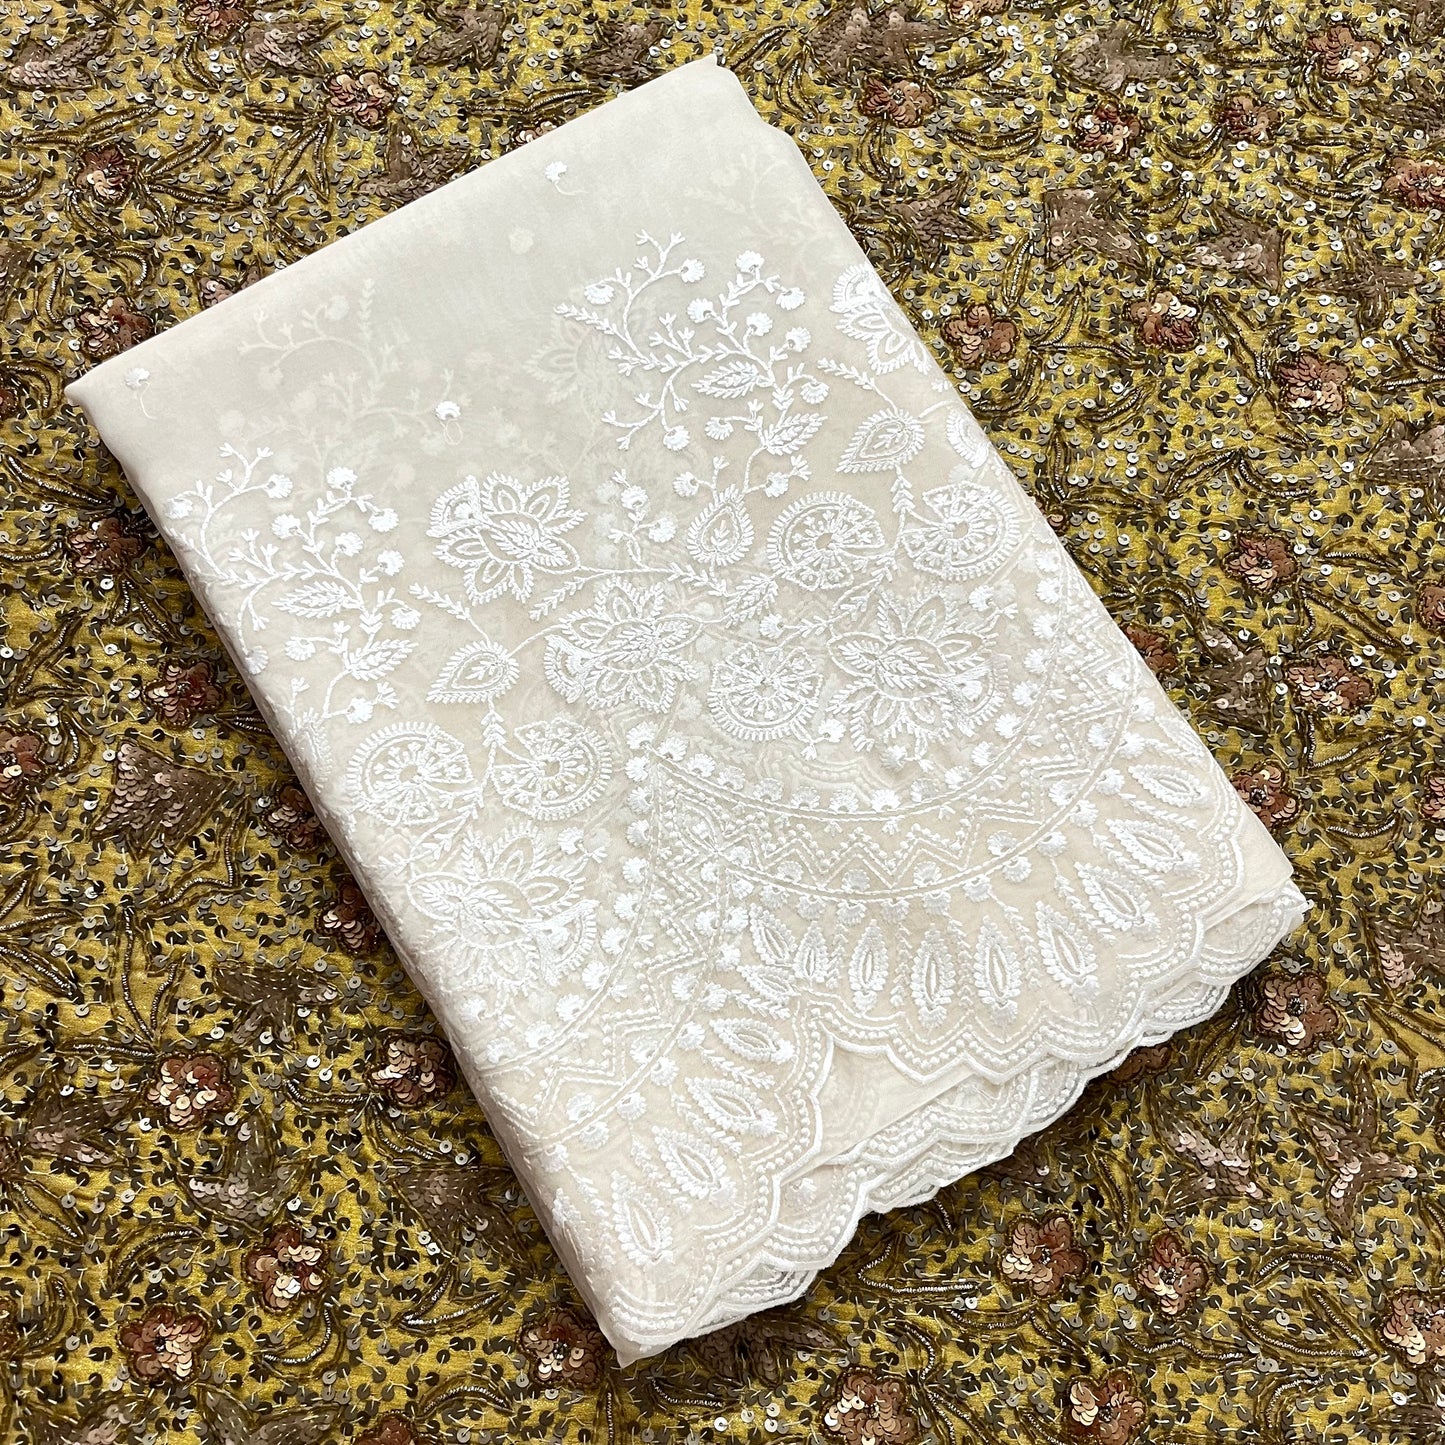 Pearl white banarasi organza silk saree with threadwork all over